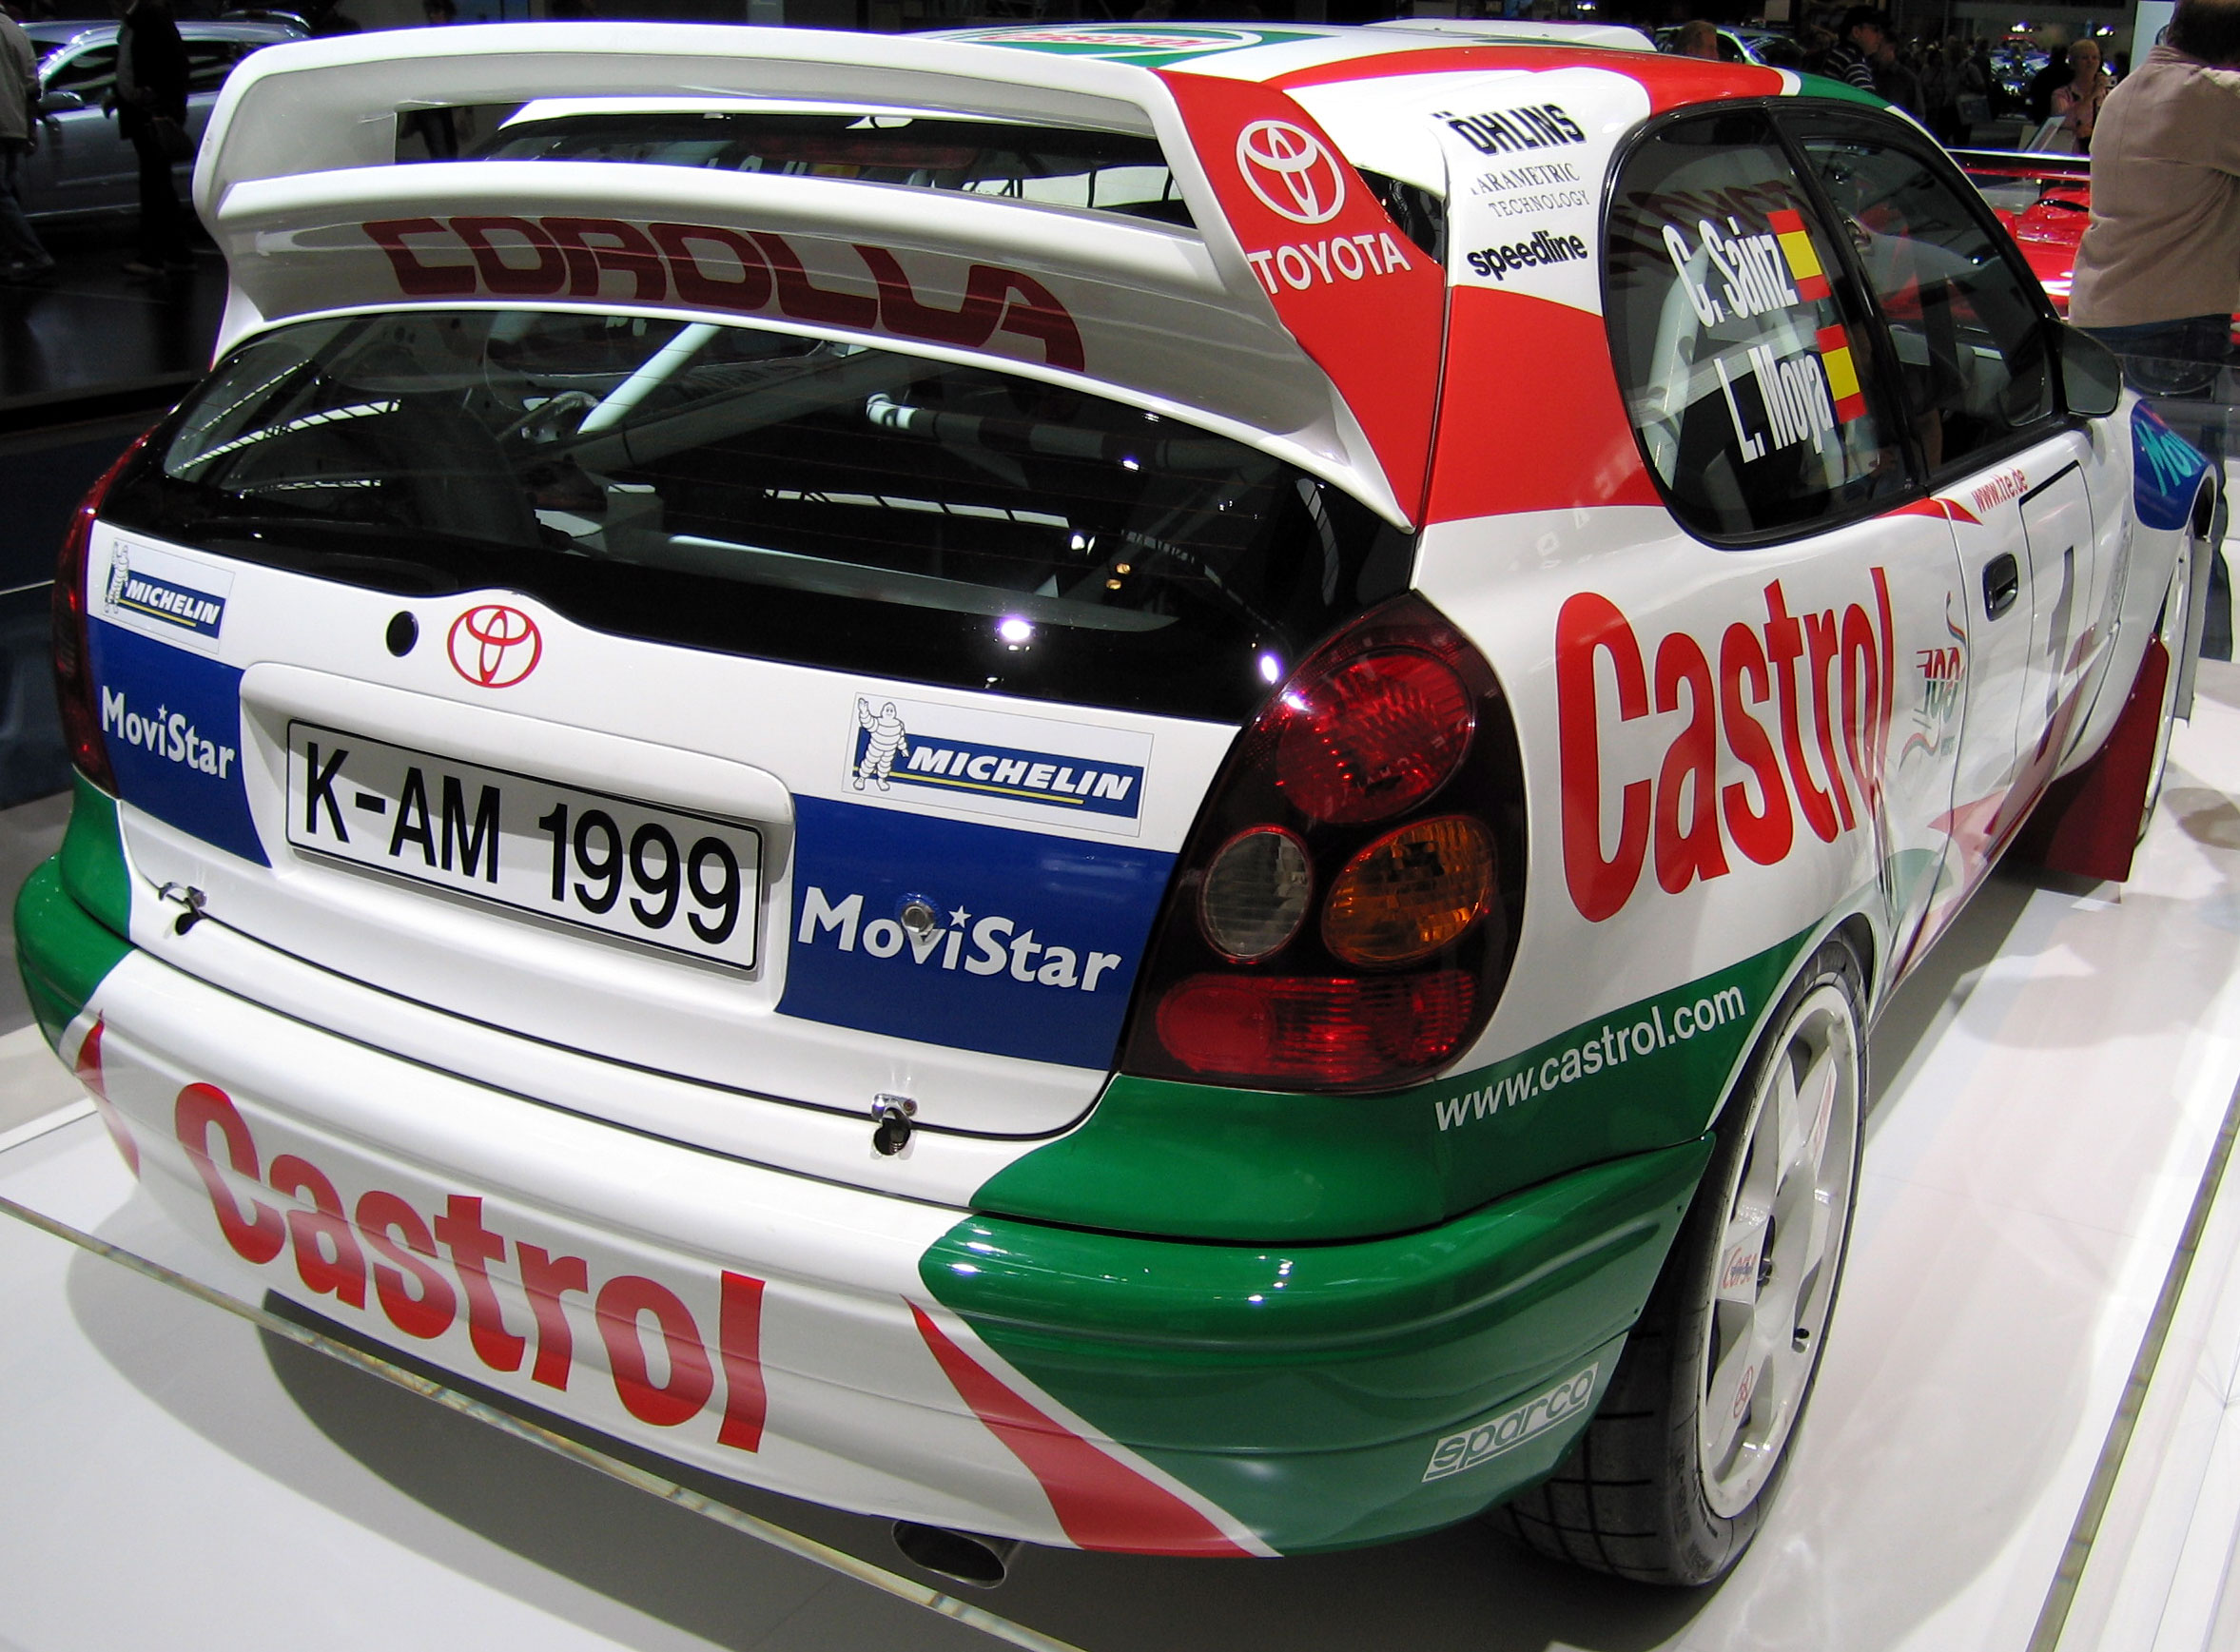 Toyota Corolla WRC 2000 rear